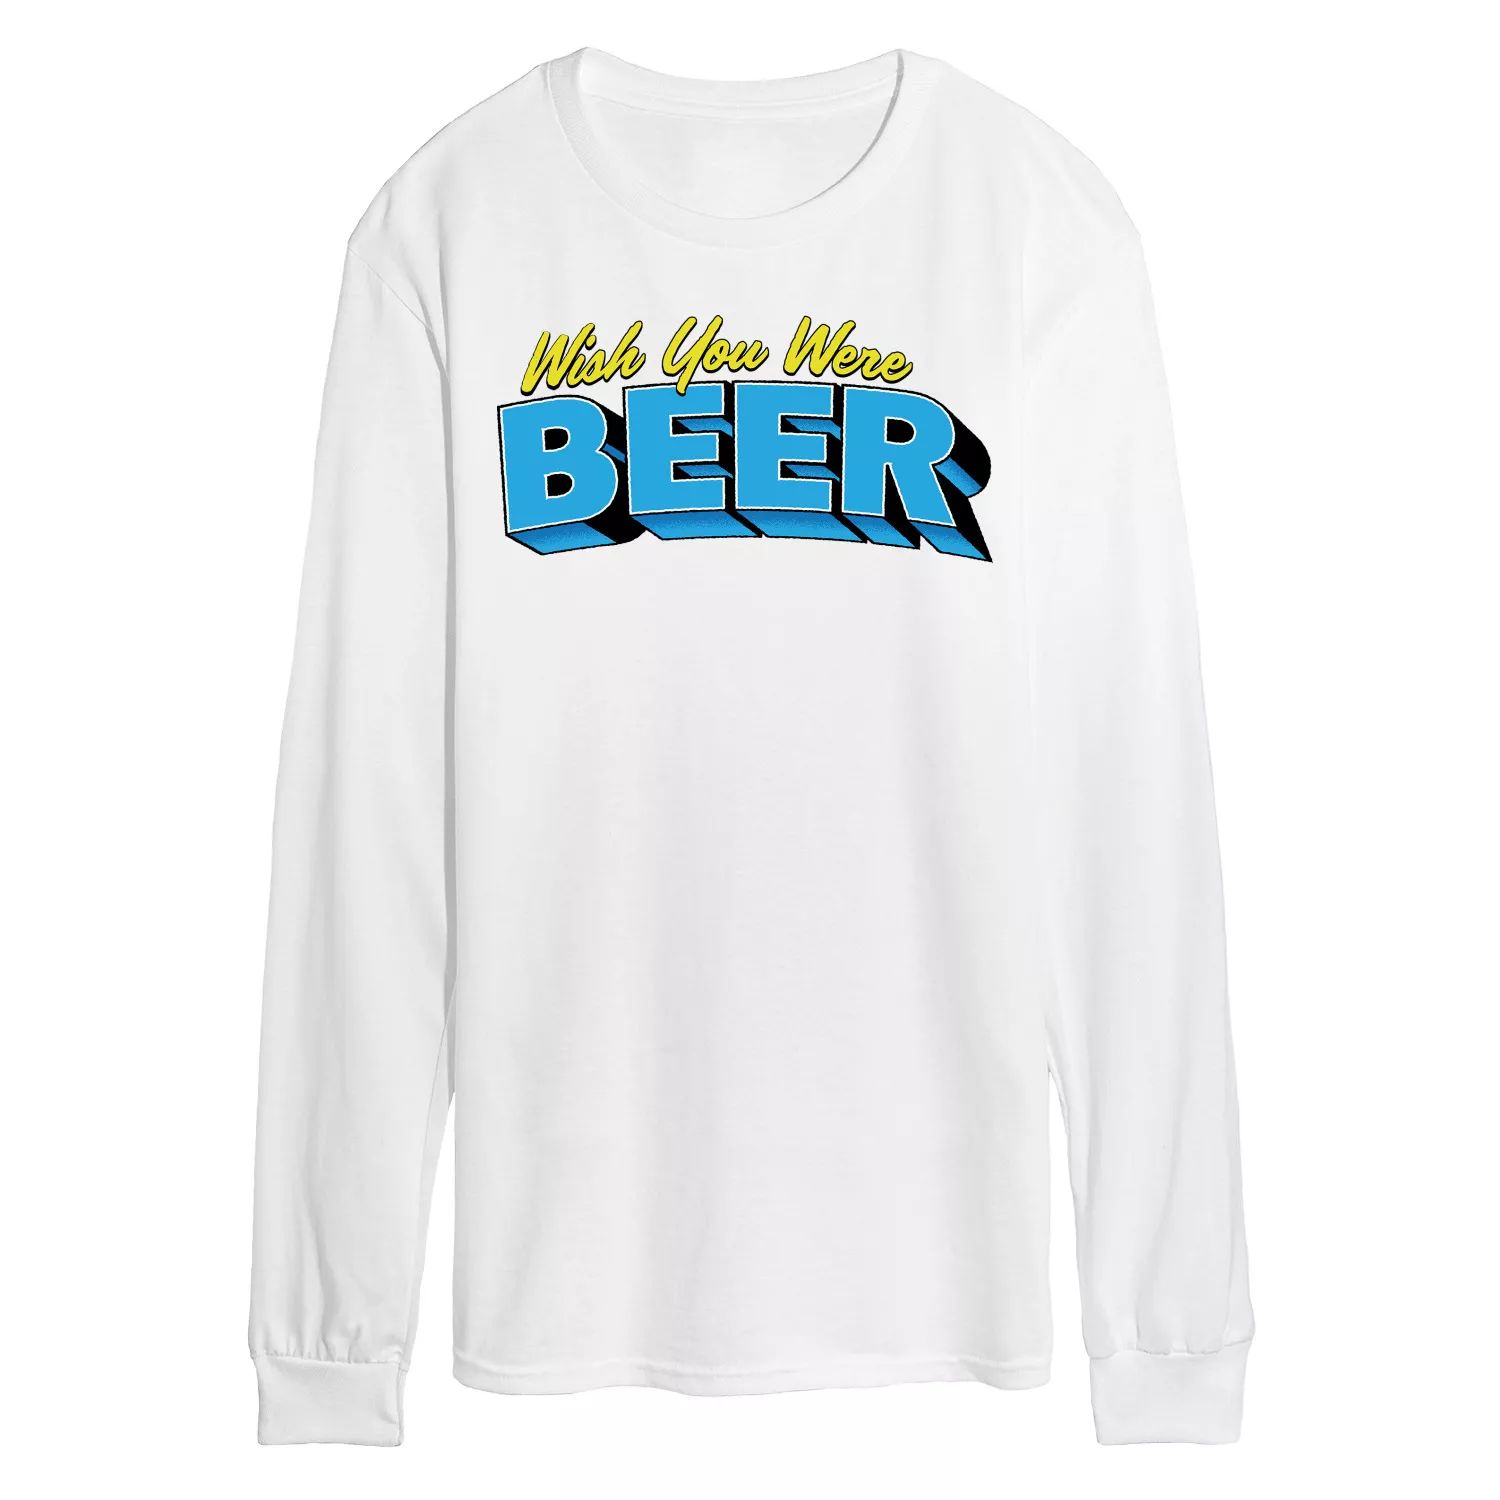 Мужская футболка с рисунком Wish You Were Beer Licensed Character